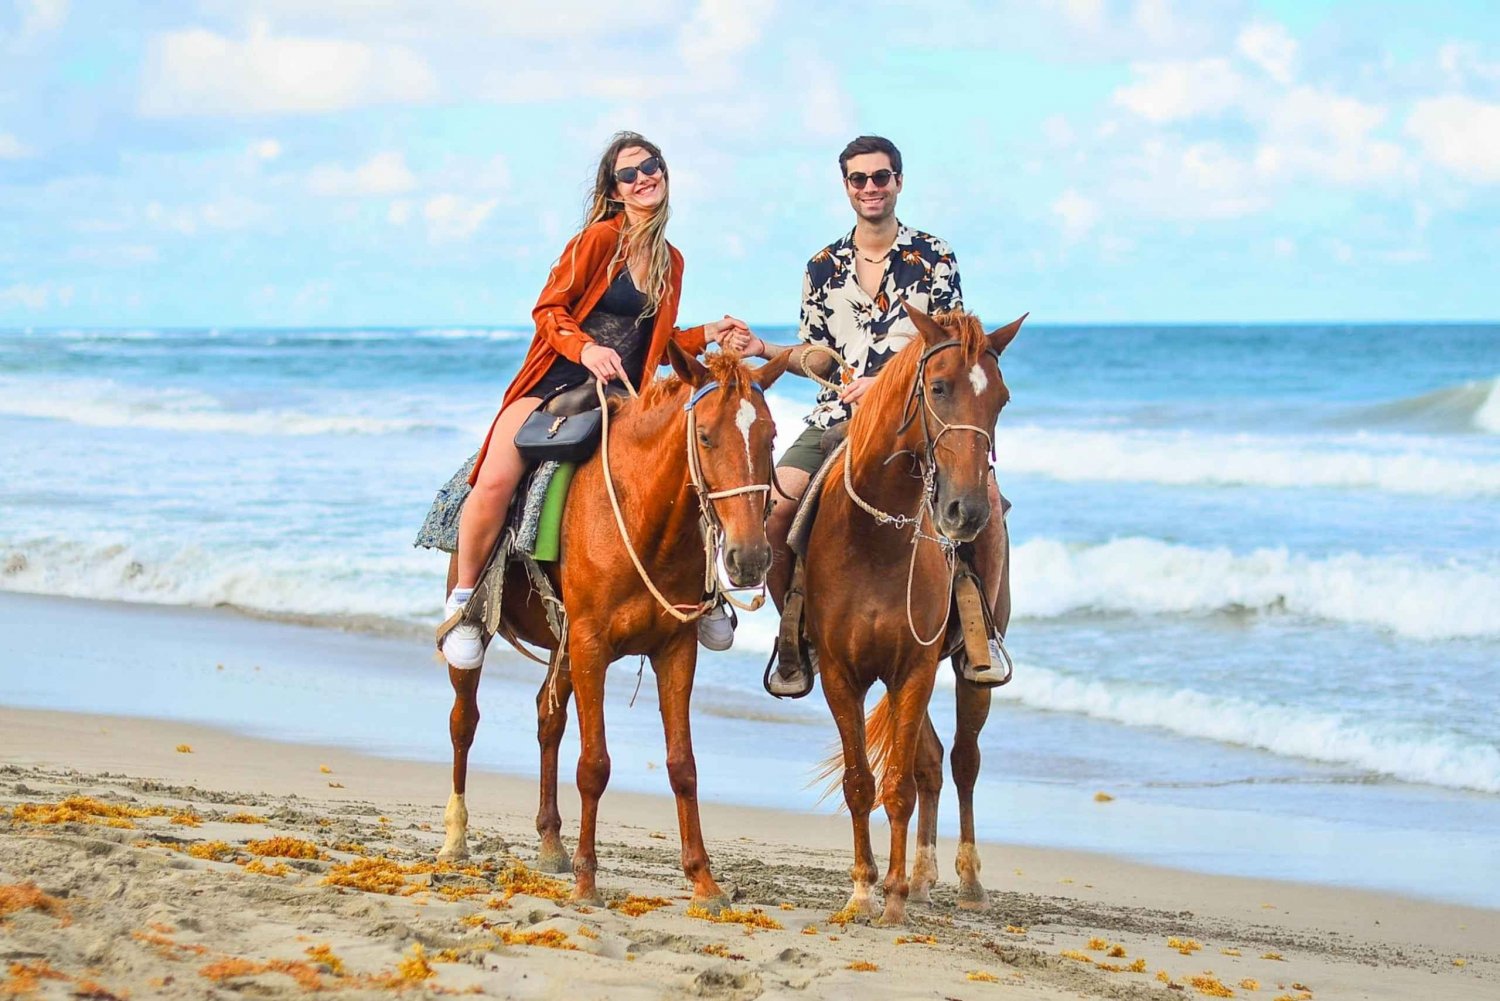 Punta Cana: Horseback Riding along Macao Beach